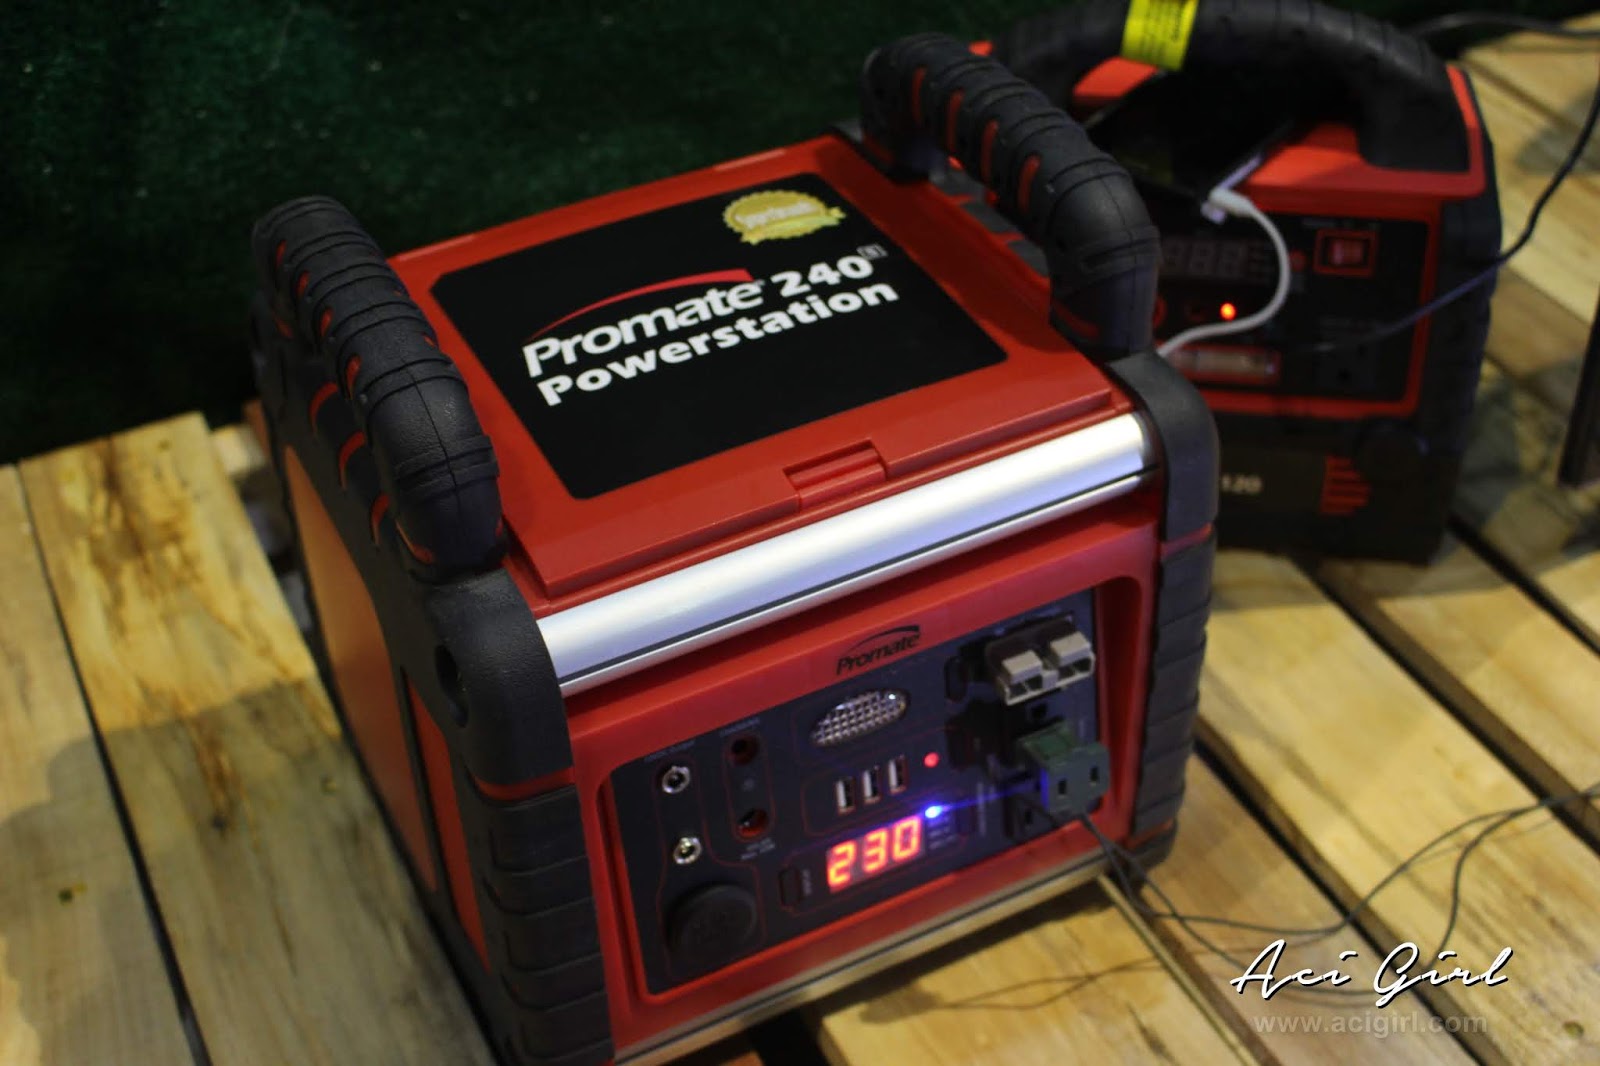 Promate 240 Powerstation Generator, Generator